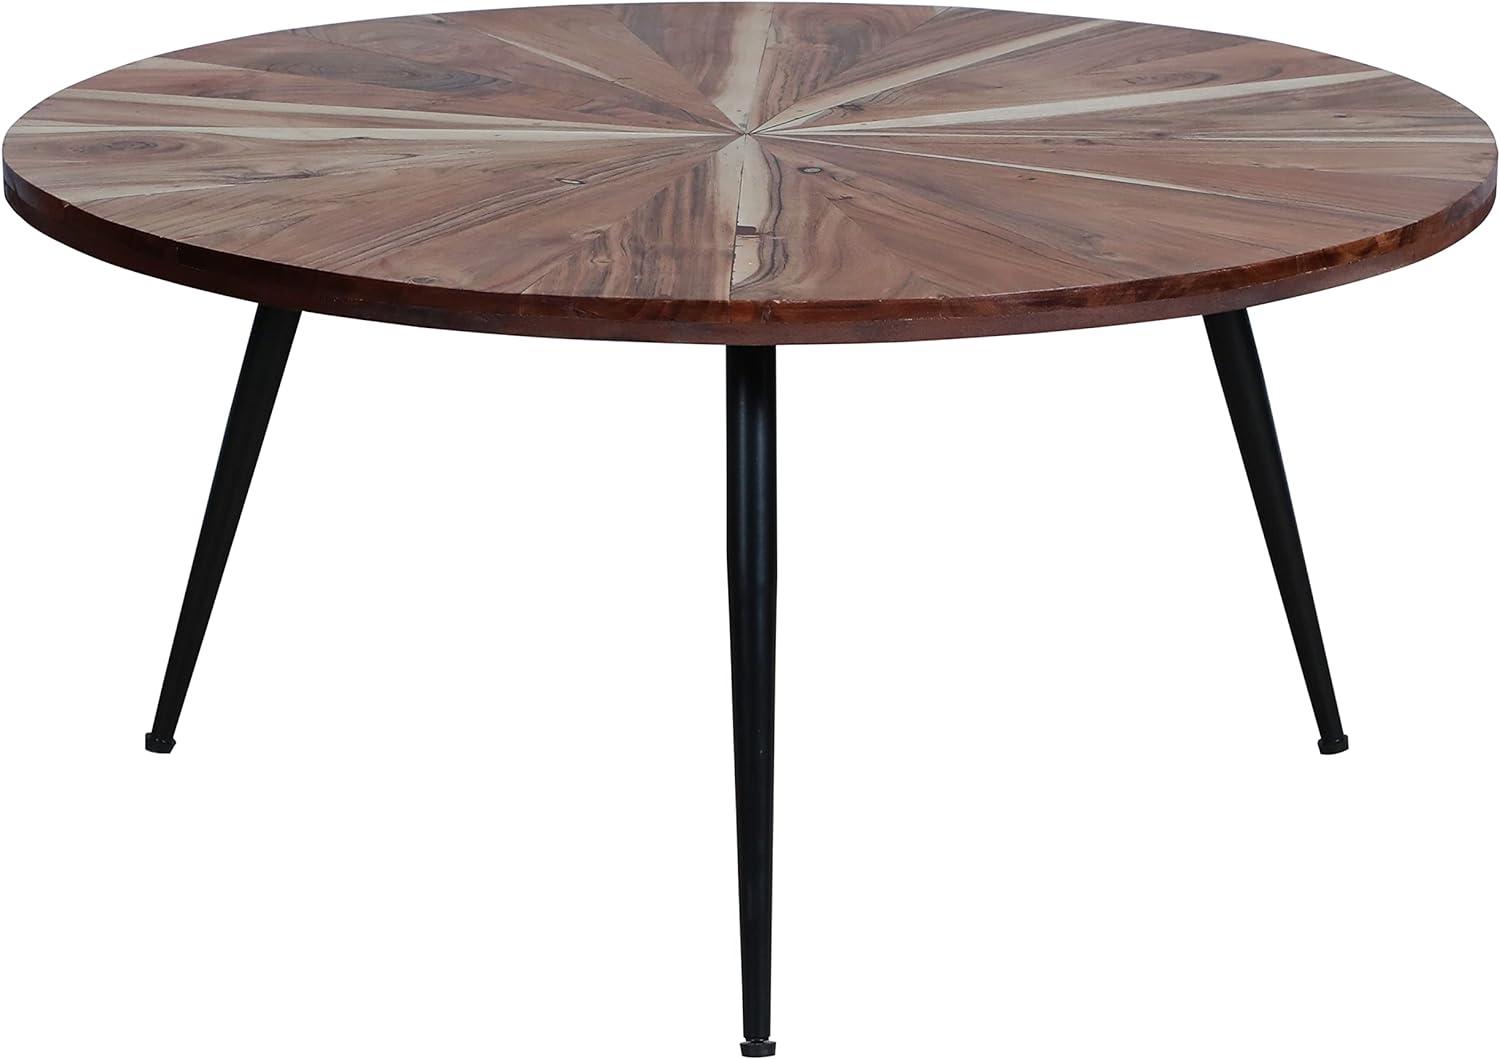 31" Round Sunburst Design Coffee Table with Black Iron Legs